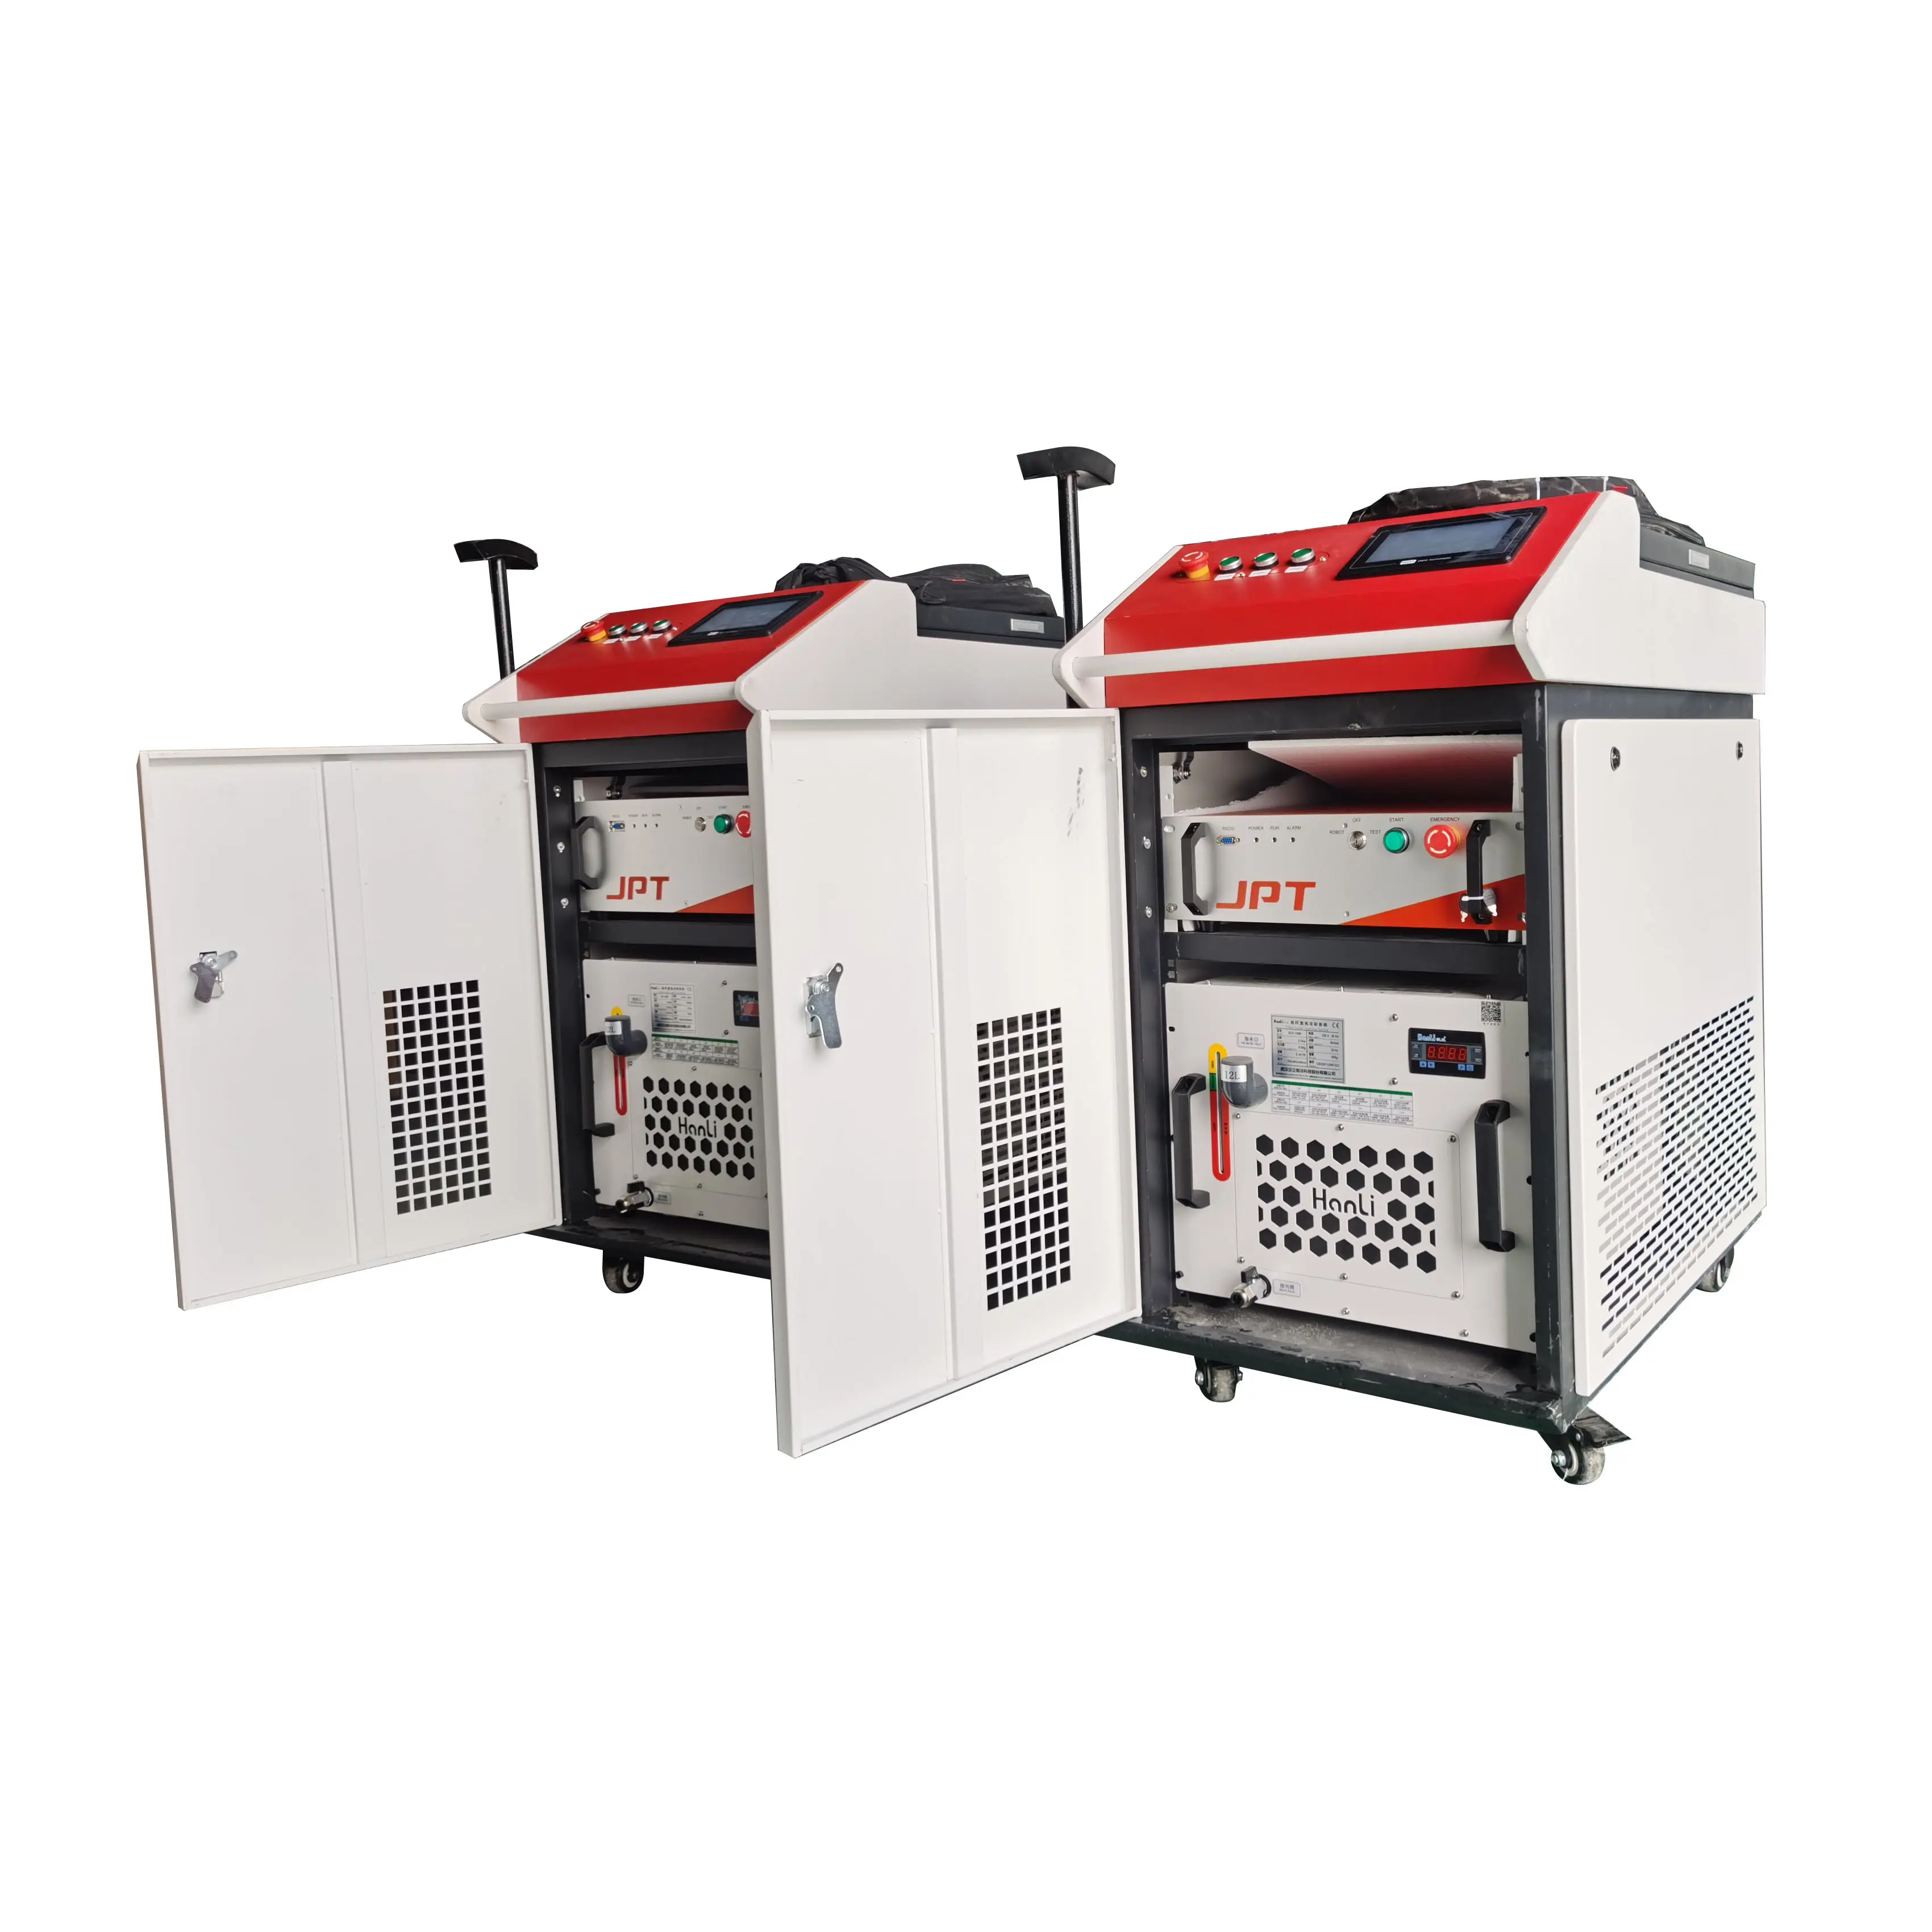 Perusahaan Laser Shandong AE1000 Pembersihan Permukaan Logam dengan Mesin Pembersih Laser Penghilang Karat